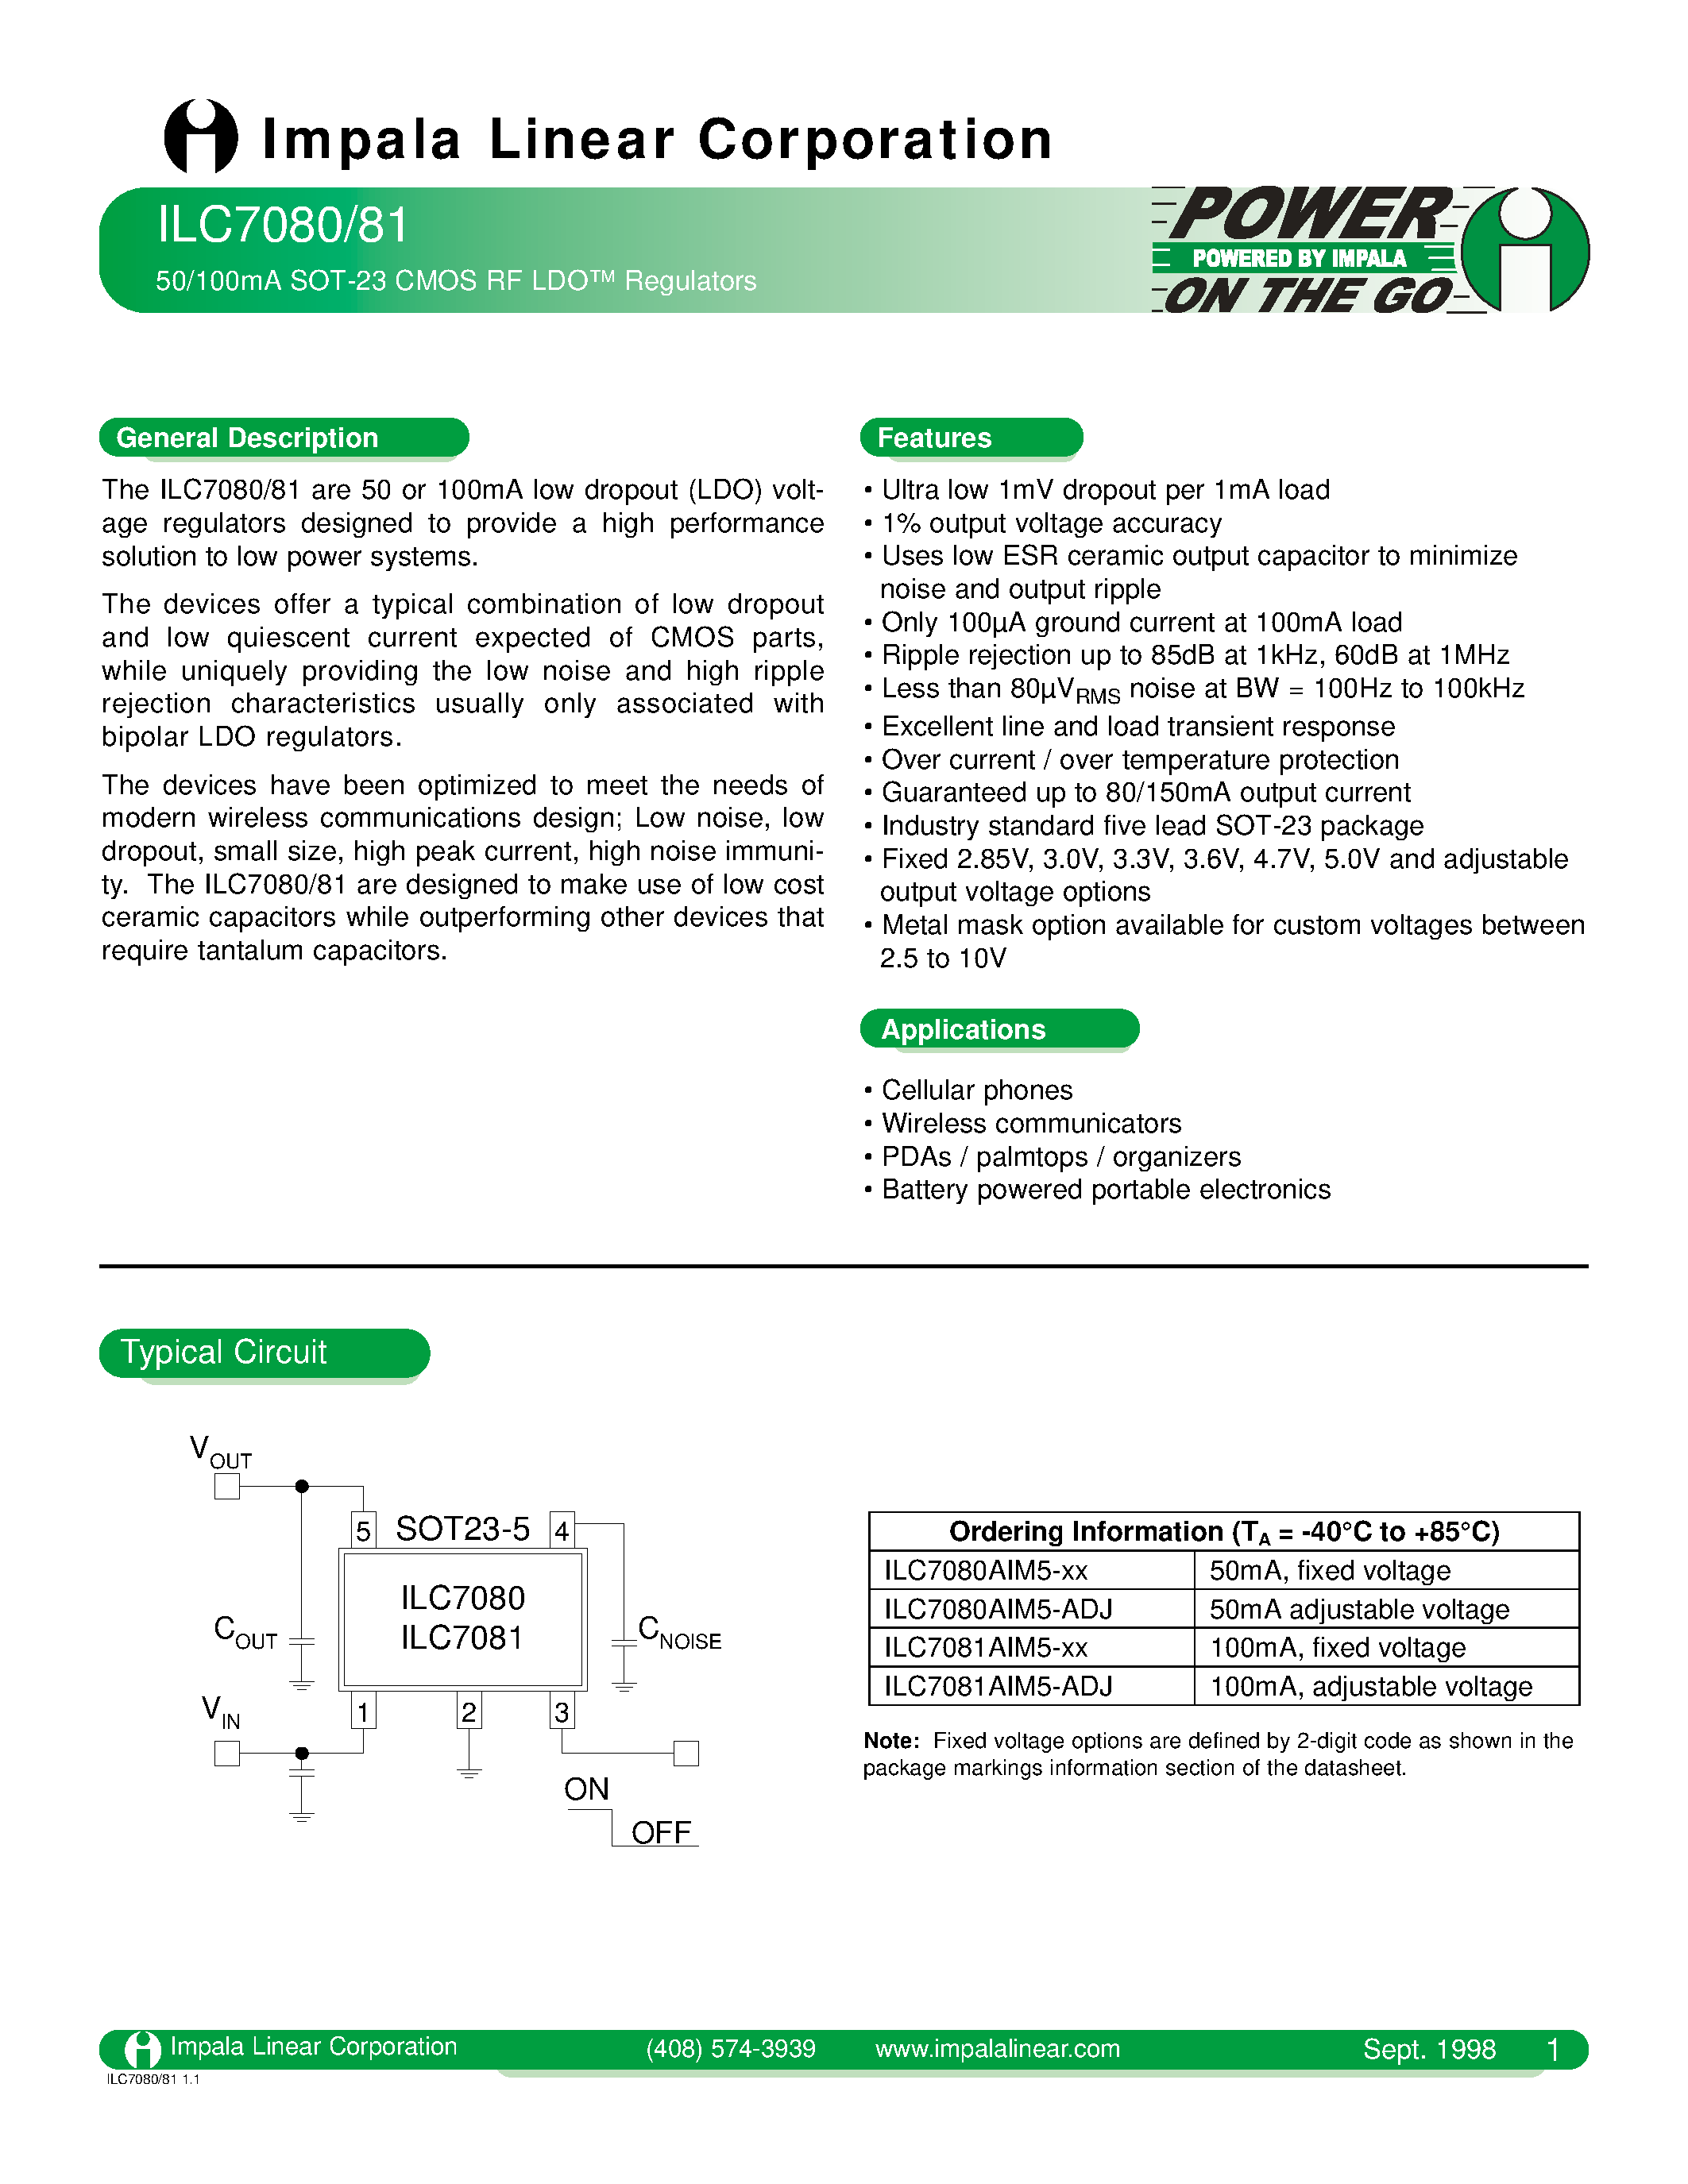 Datasheet ILC7081AIM5-30 - 50/100M SOT-23 CMOS RF LDO REGULATORS page 1